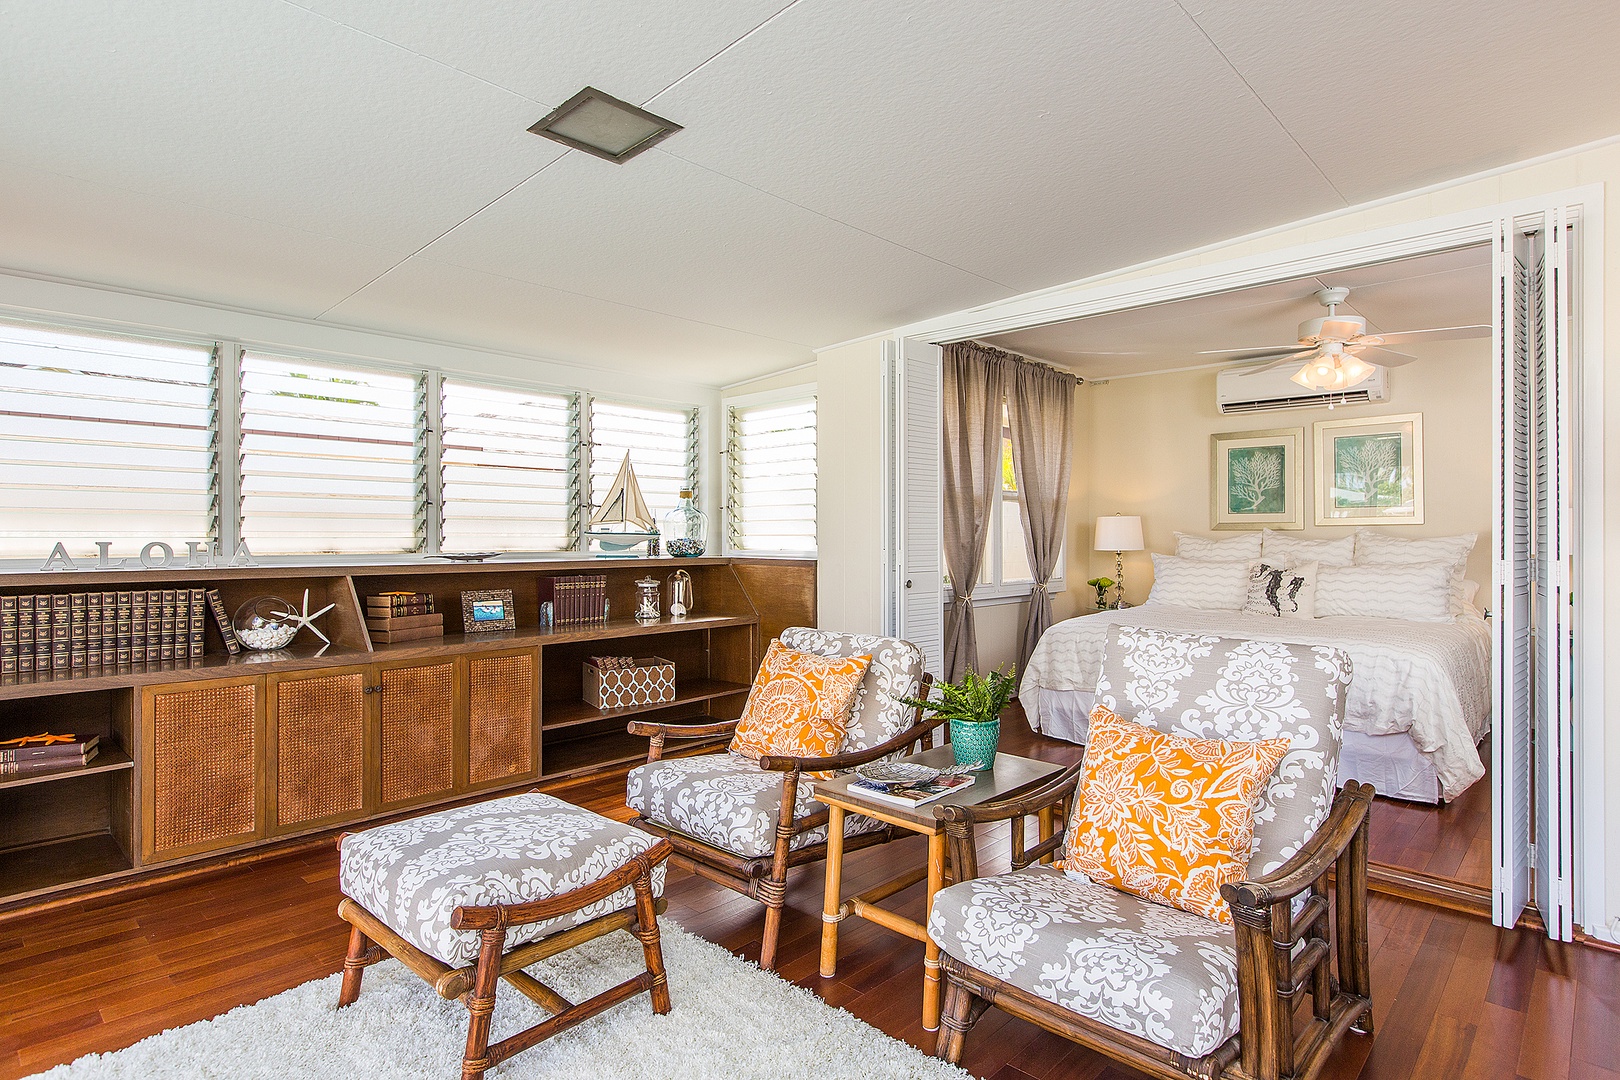 Honolulu Vacation Rentals, Kahala Cottage - Sitting room off of the primary bedroom.